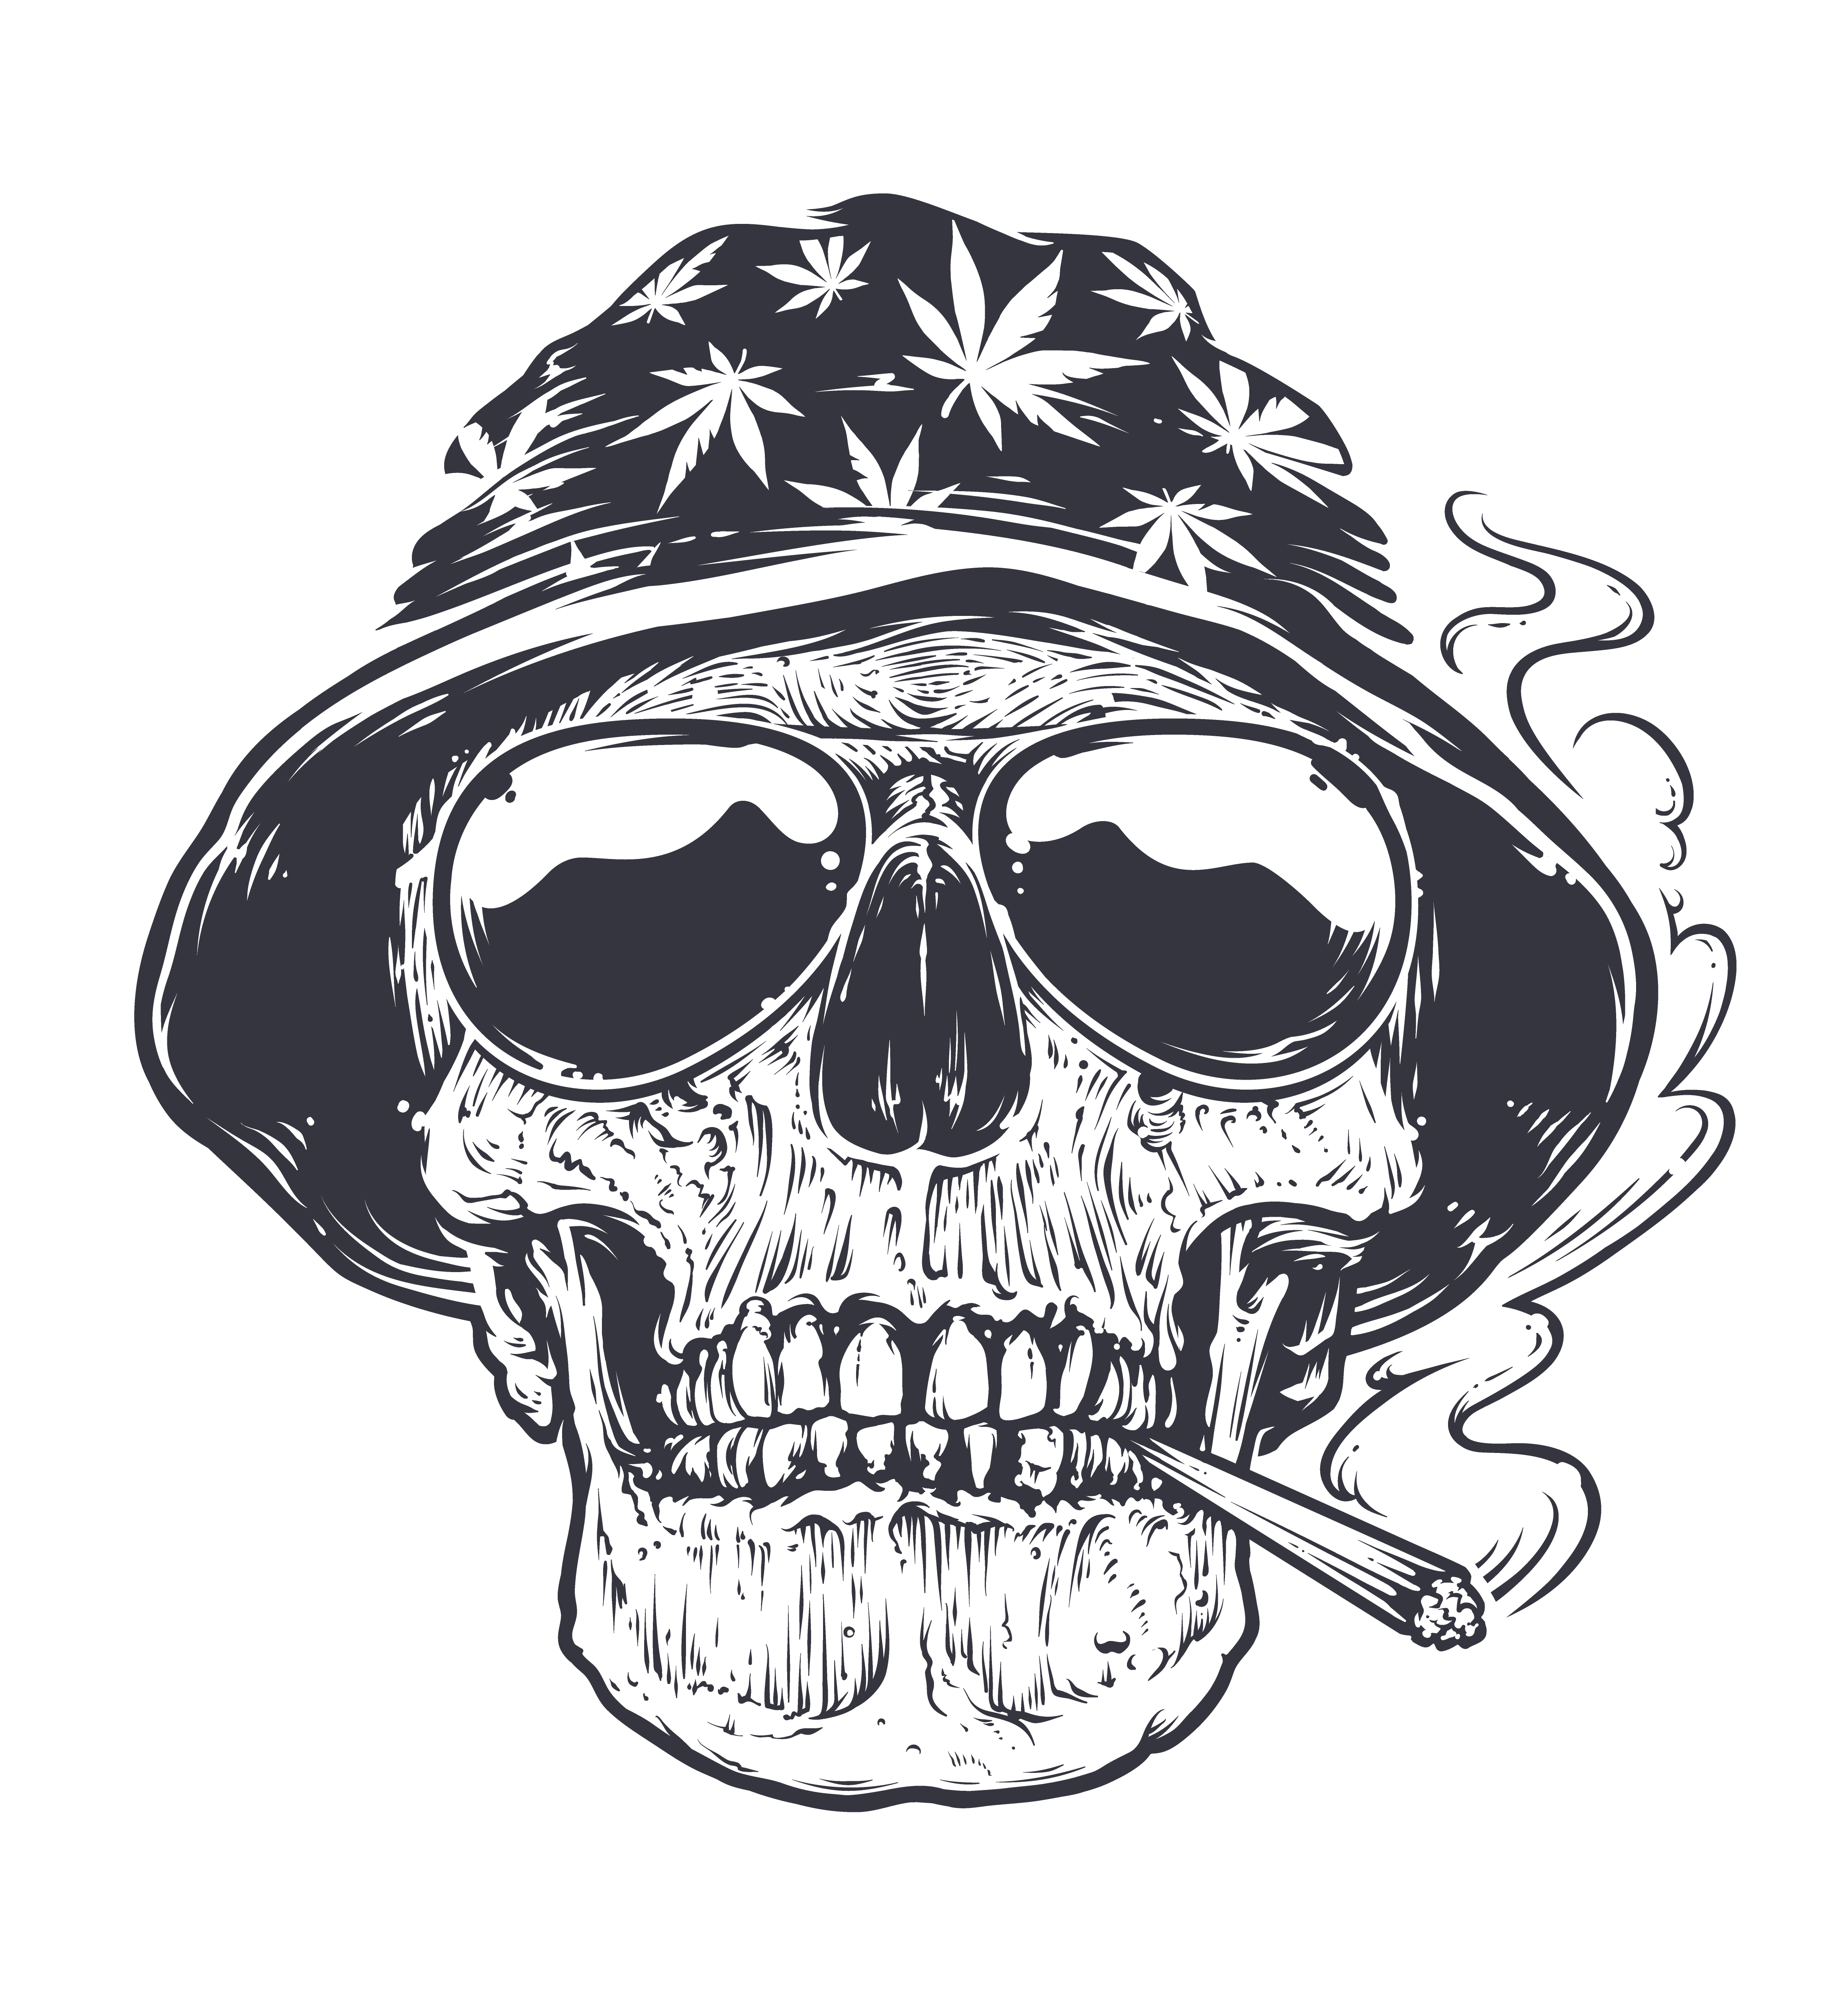 Download Rastaman Skull Art - Download Free Vectors, Clipart ...